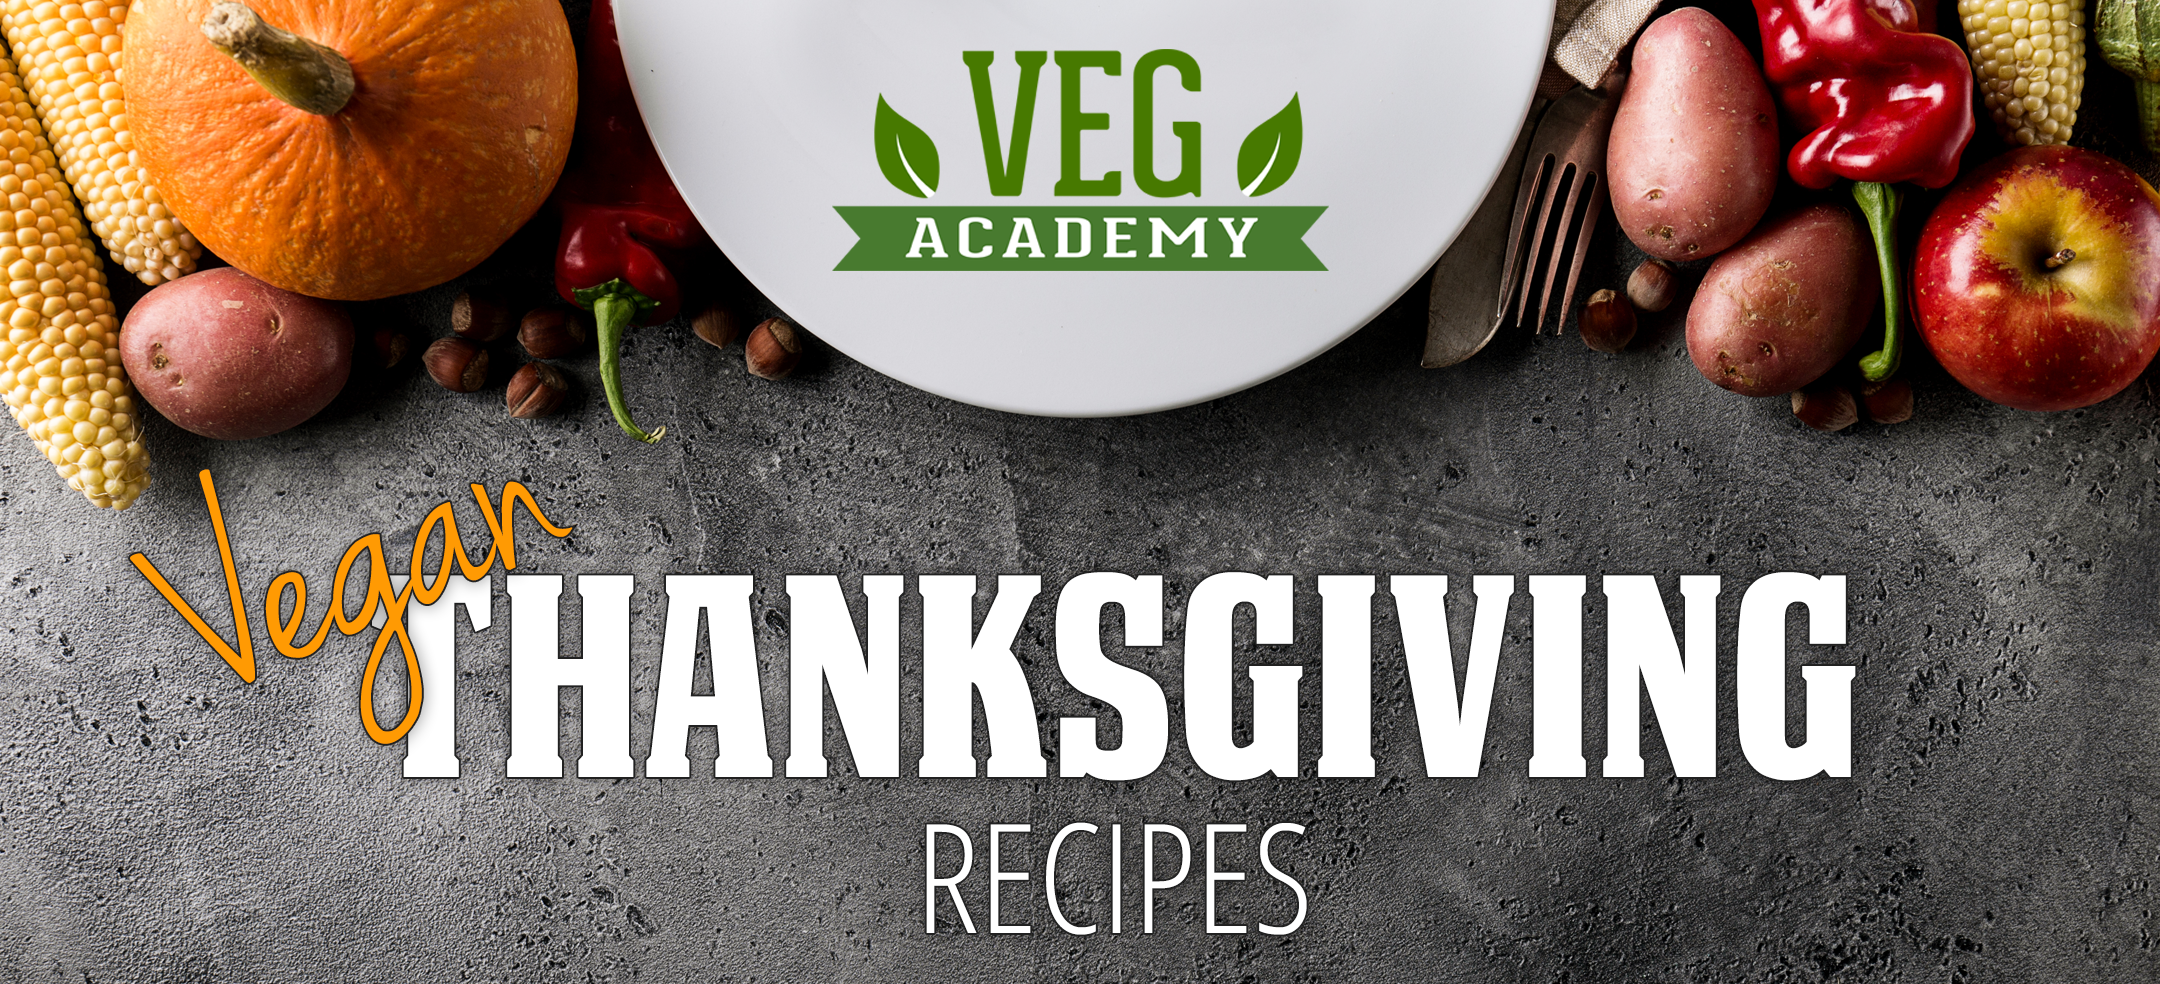 Easy Vegan Thanksgiving Recipes